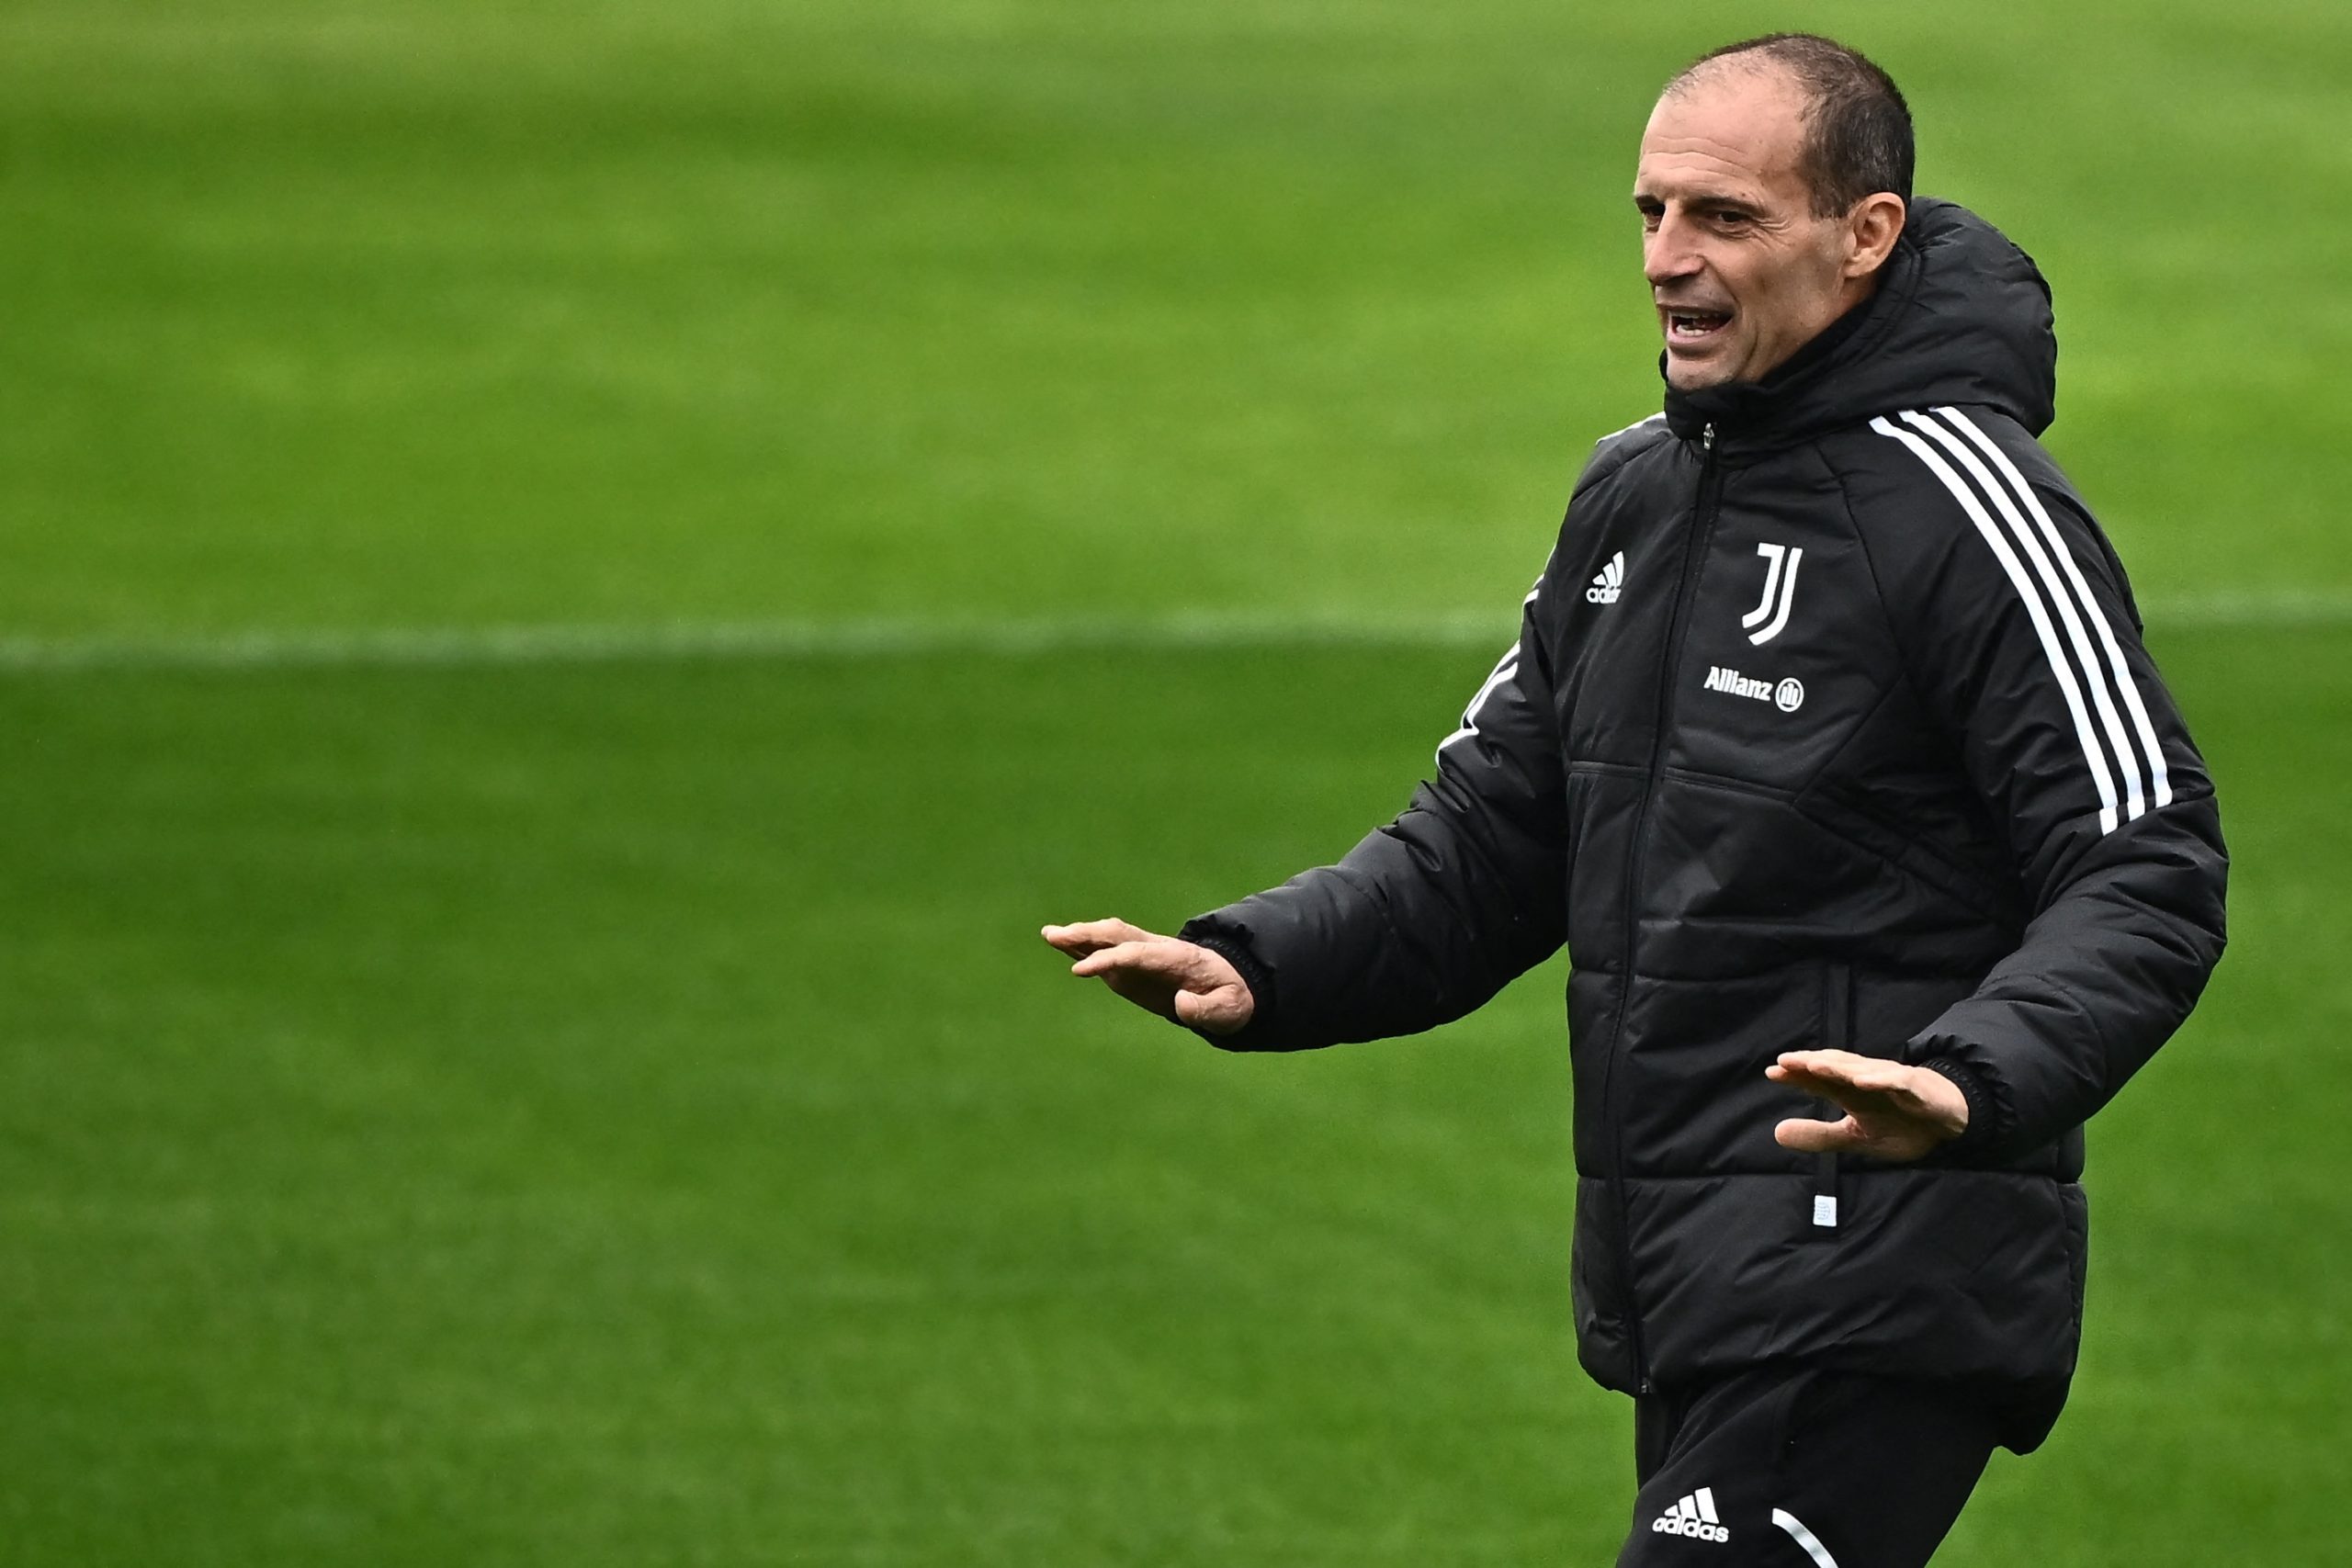 Juventus manager, Massimiliano Allegri, gestures during a training session.